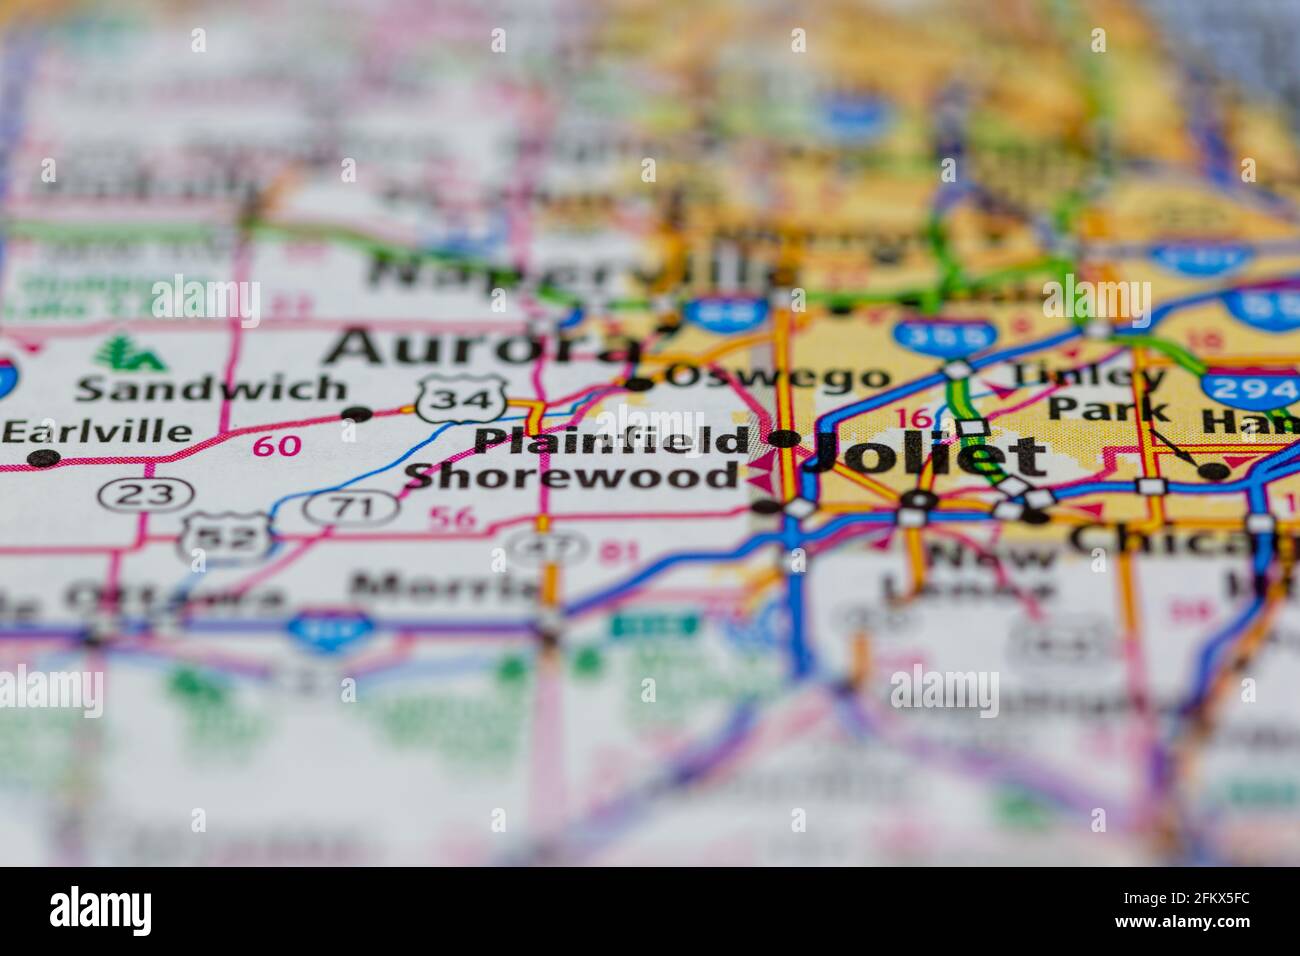 Plainfield Illinois Se Muestra En Un Mapa Geografico O Mapa De Carreteras 2fkx5fc 